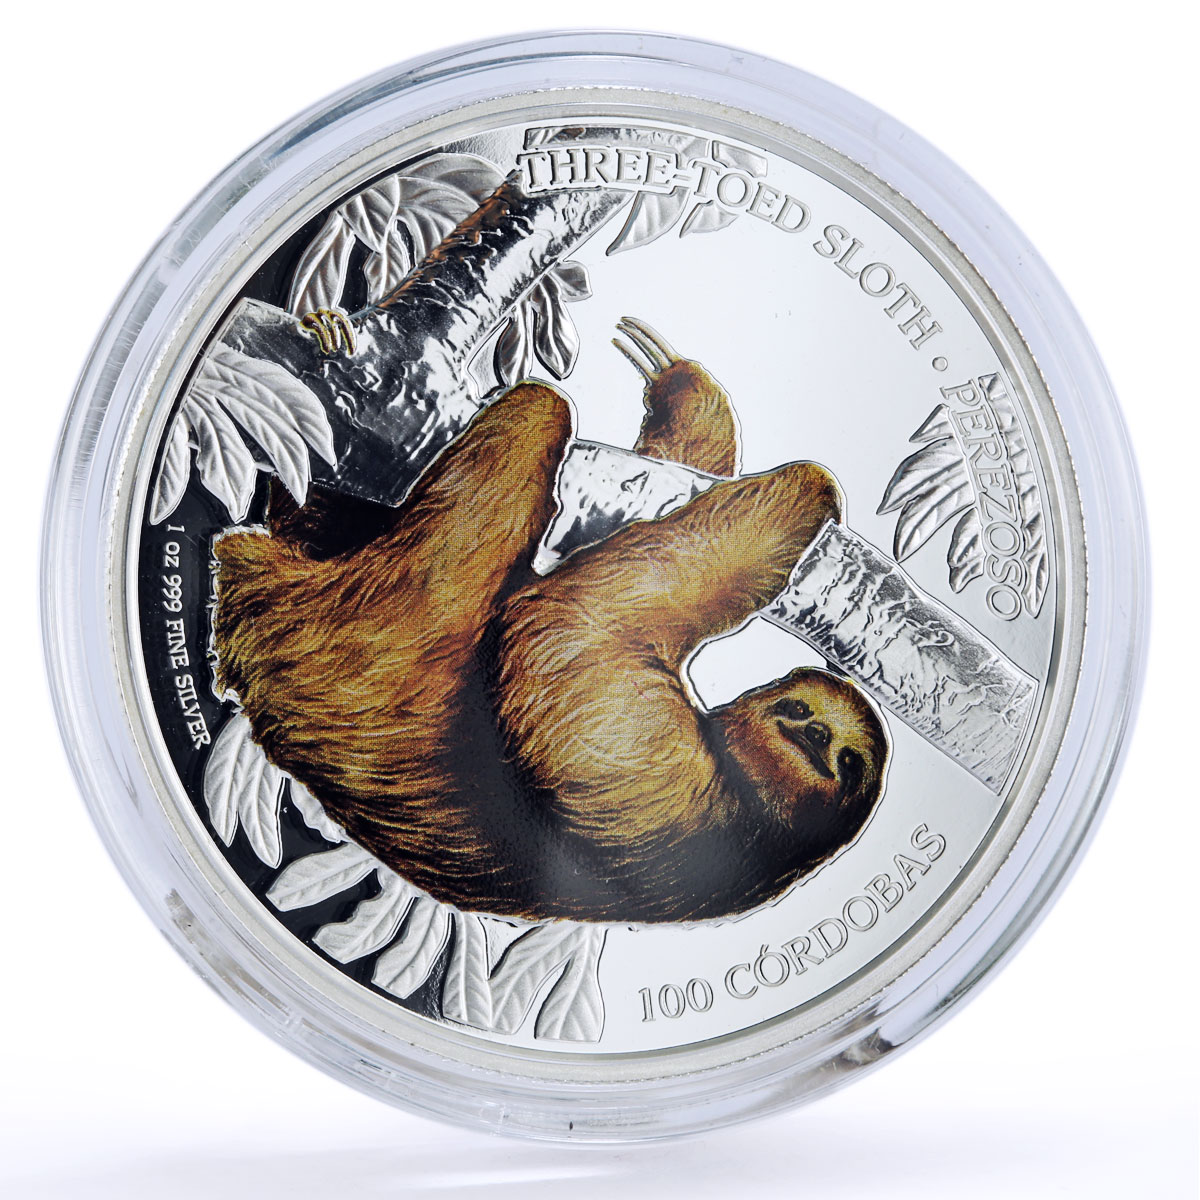 Nicaragua 100 cordobas Conservation Wildlife Three Toed Sloth Fauna Ag coin 2018